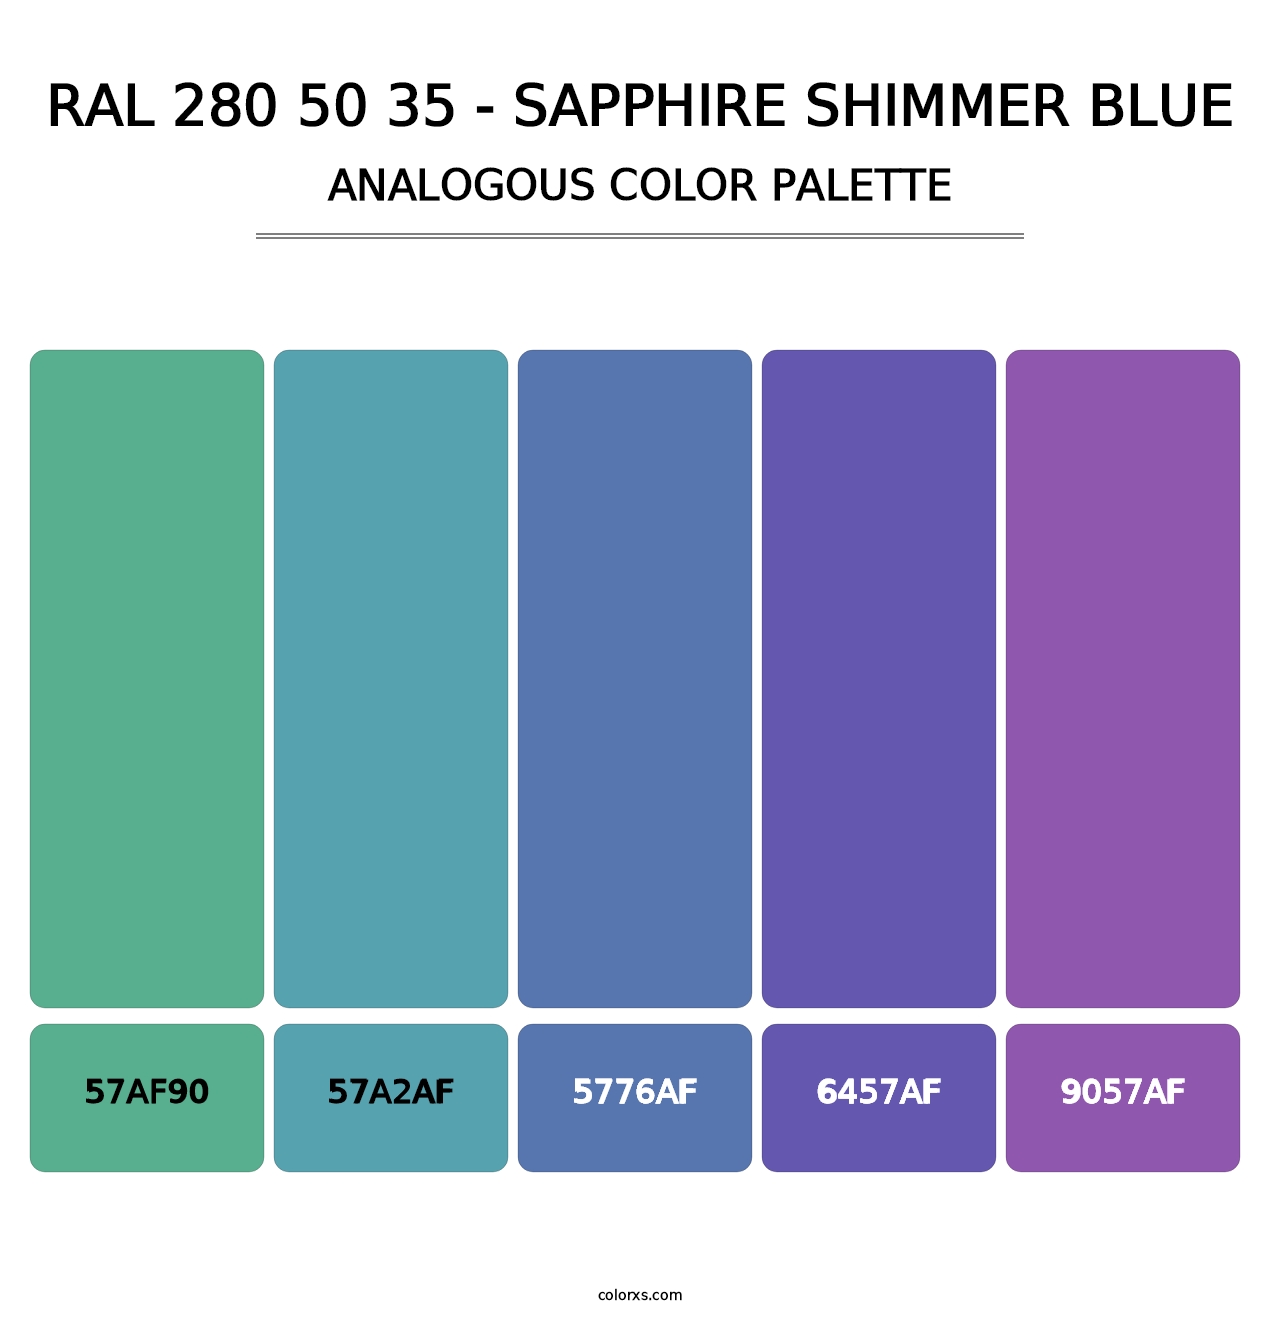 RAL 280 50 35 - Sapphire Shimmer Blue - Analogous Color Palette